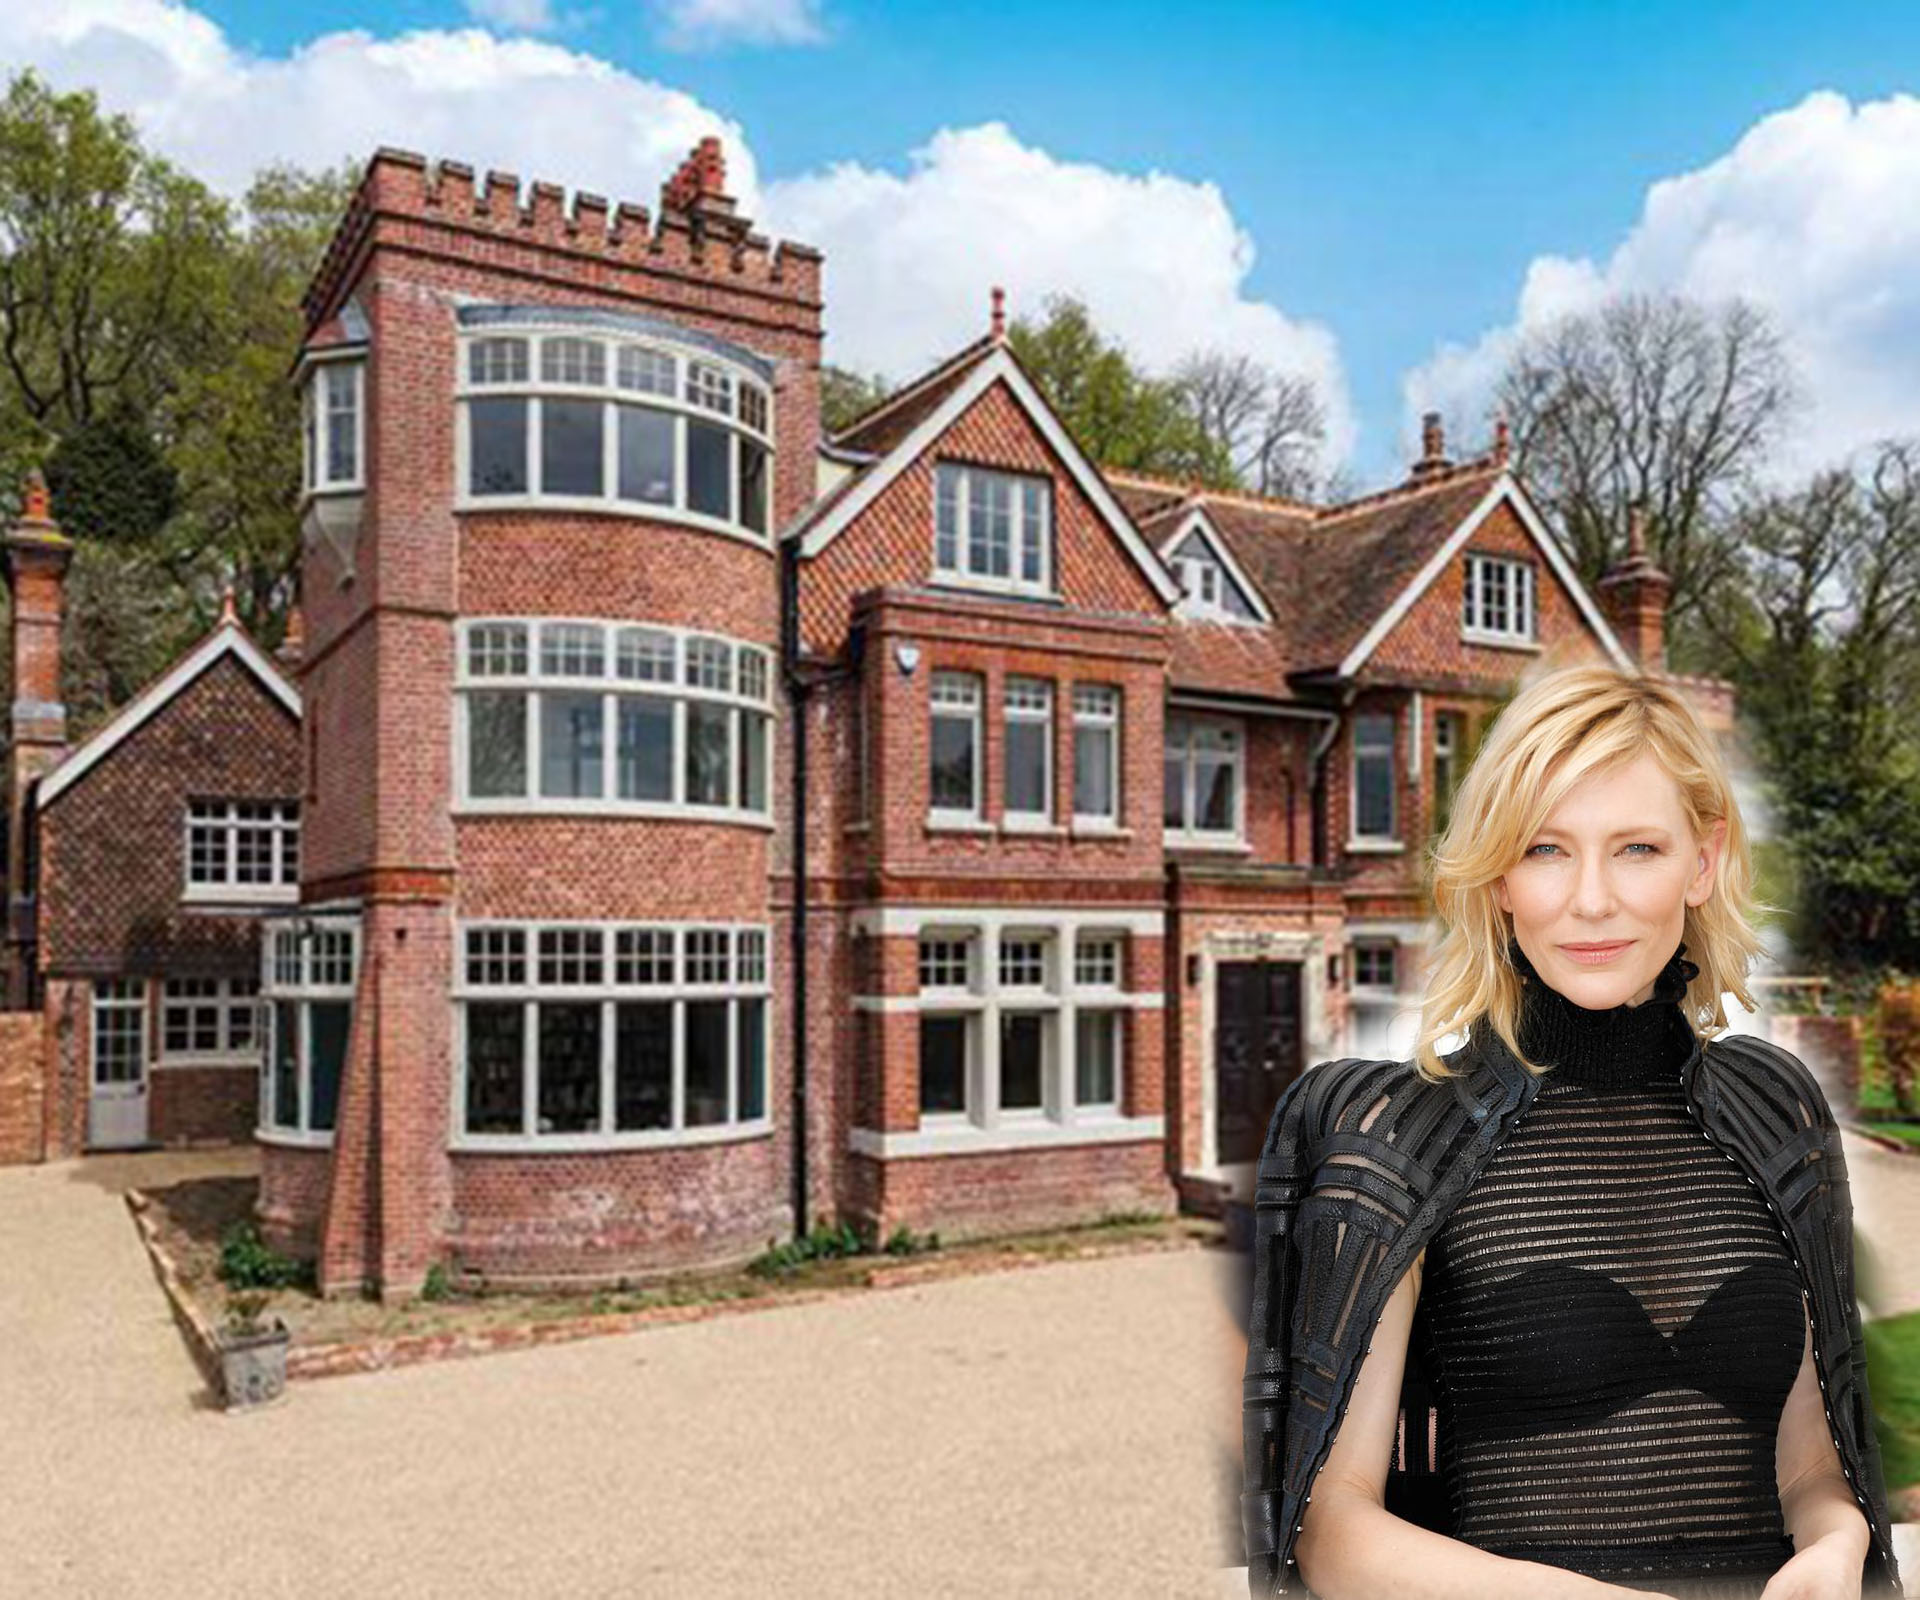 Cate Blanchett spluges on £3 million English manor